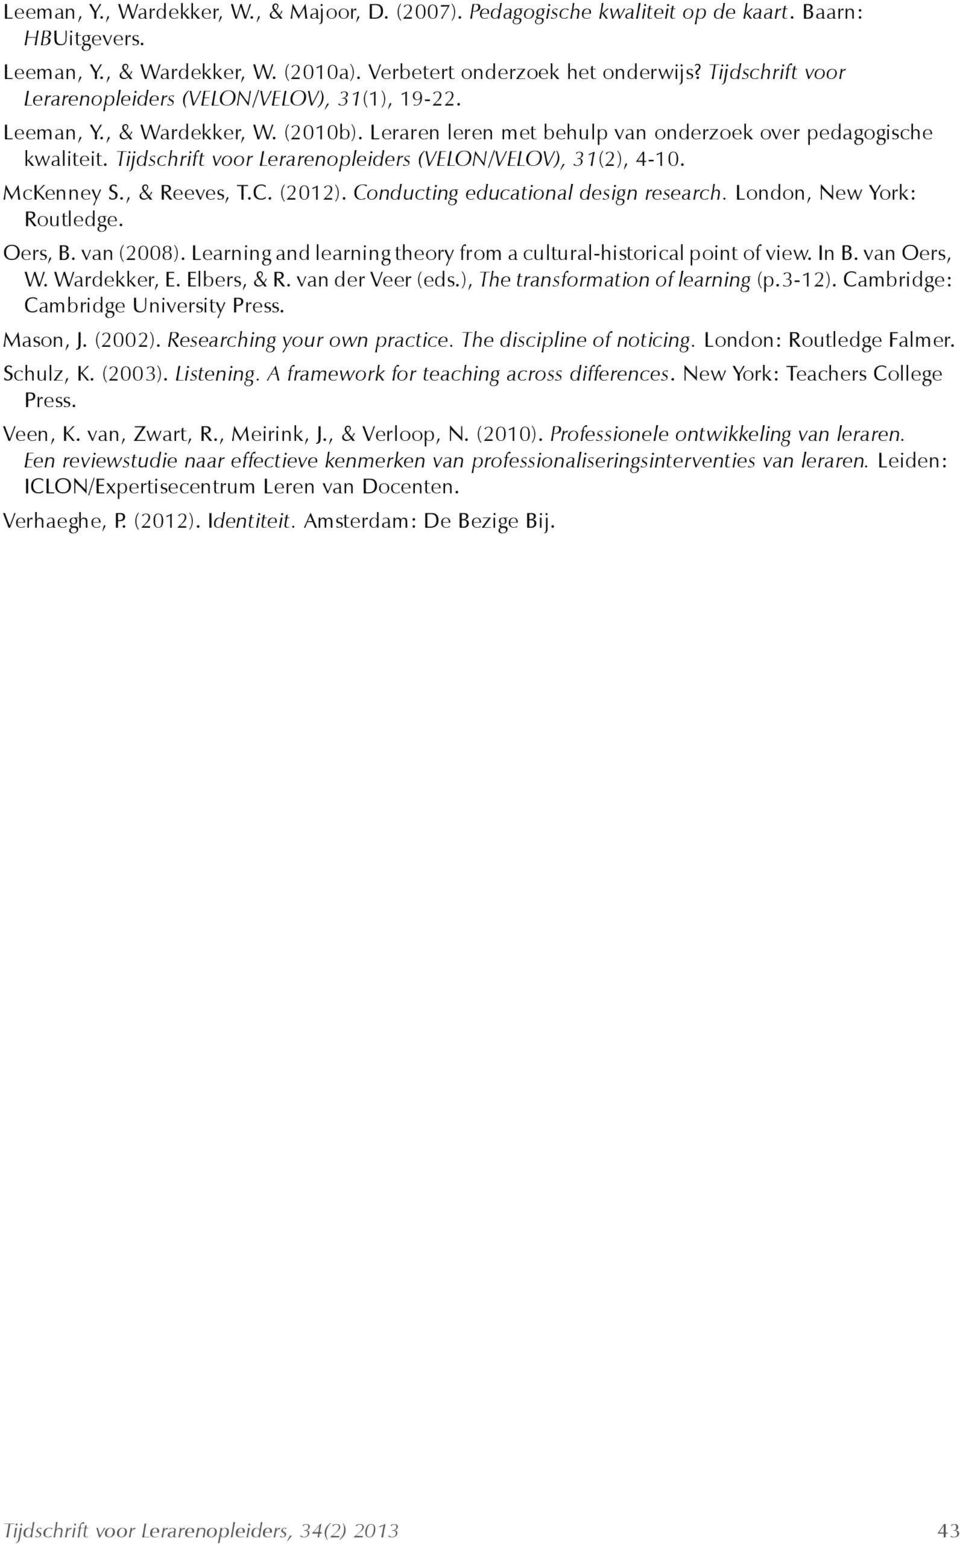 Tijdschrift voor Lerarenopleiders (VELON/VELOV), 31(2), 4-10. McKenney S., & Reeves, T.C. (2012). Conducting educational design research. London, New York: Routledge. Oers, B. van (2008).